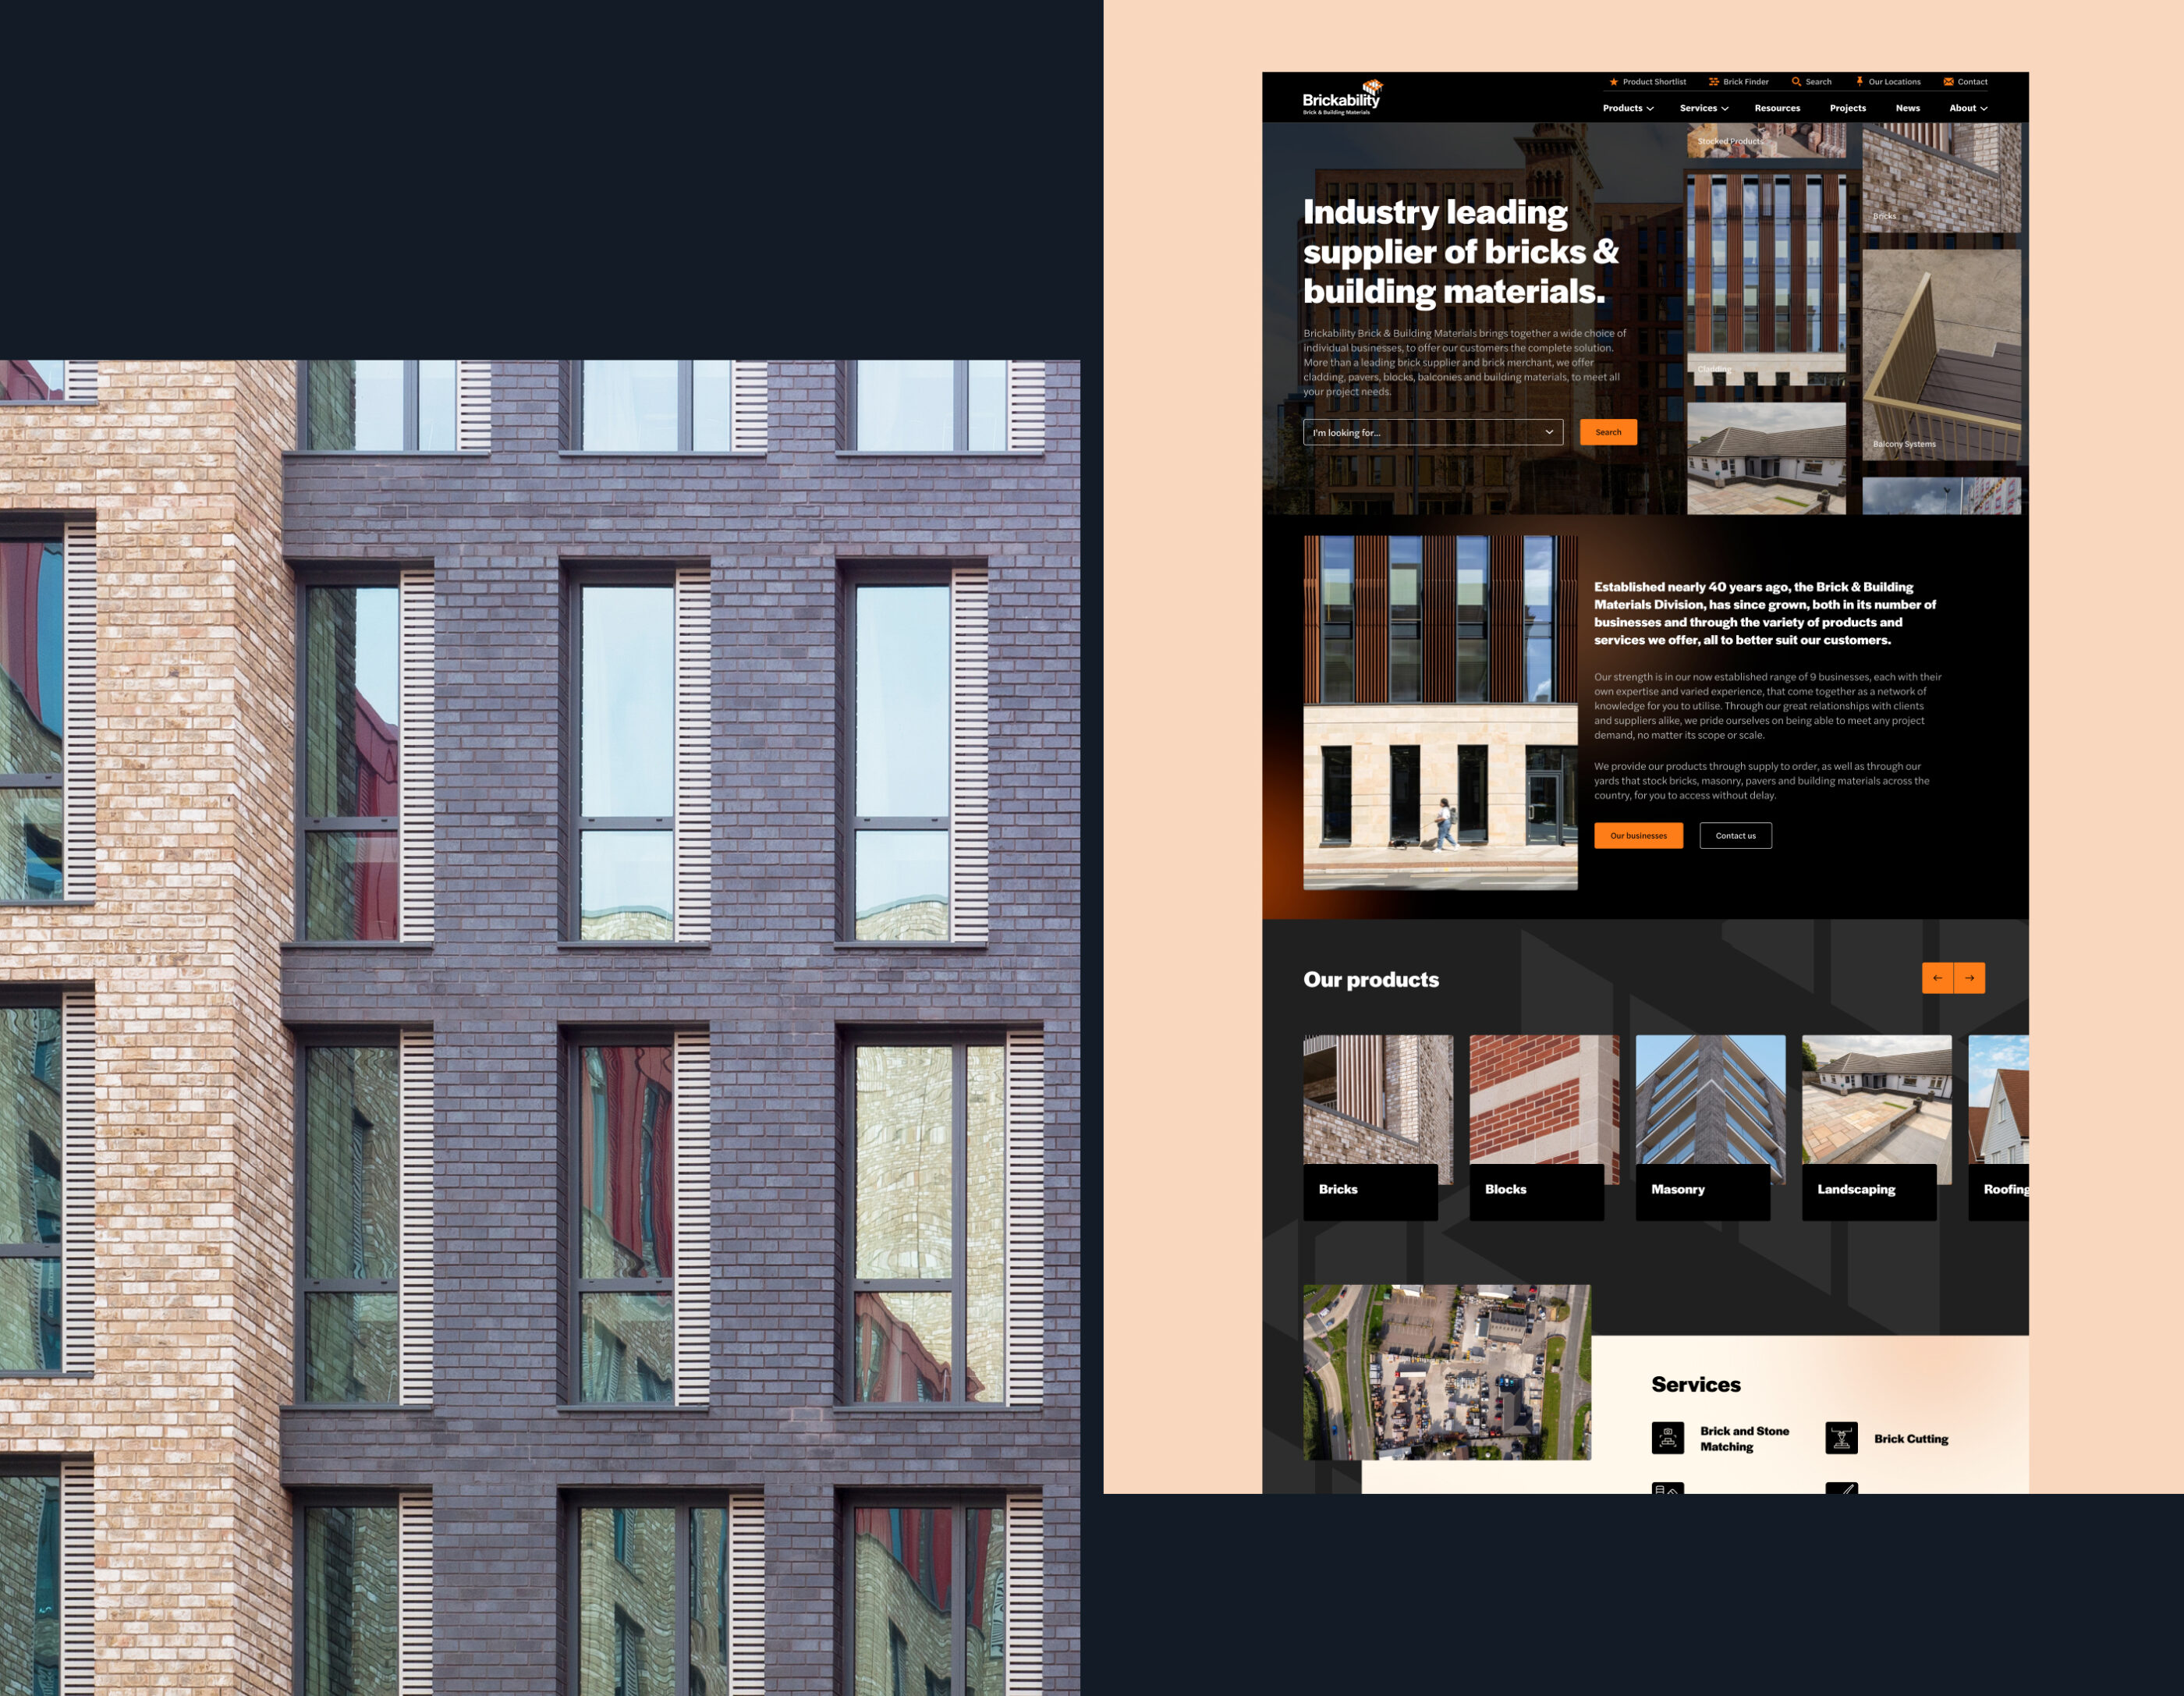 Brickability homepage design alongside brick architecture